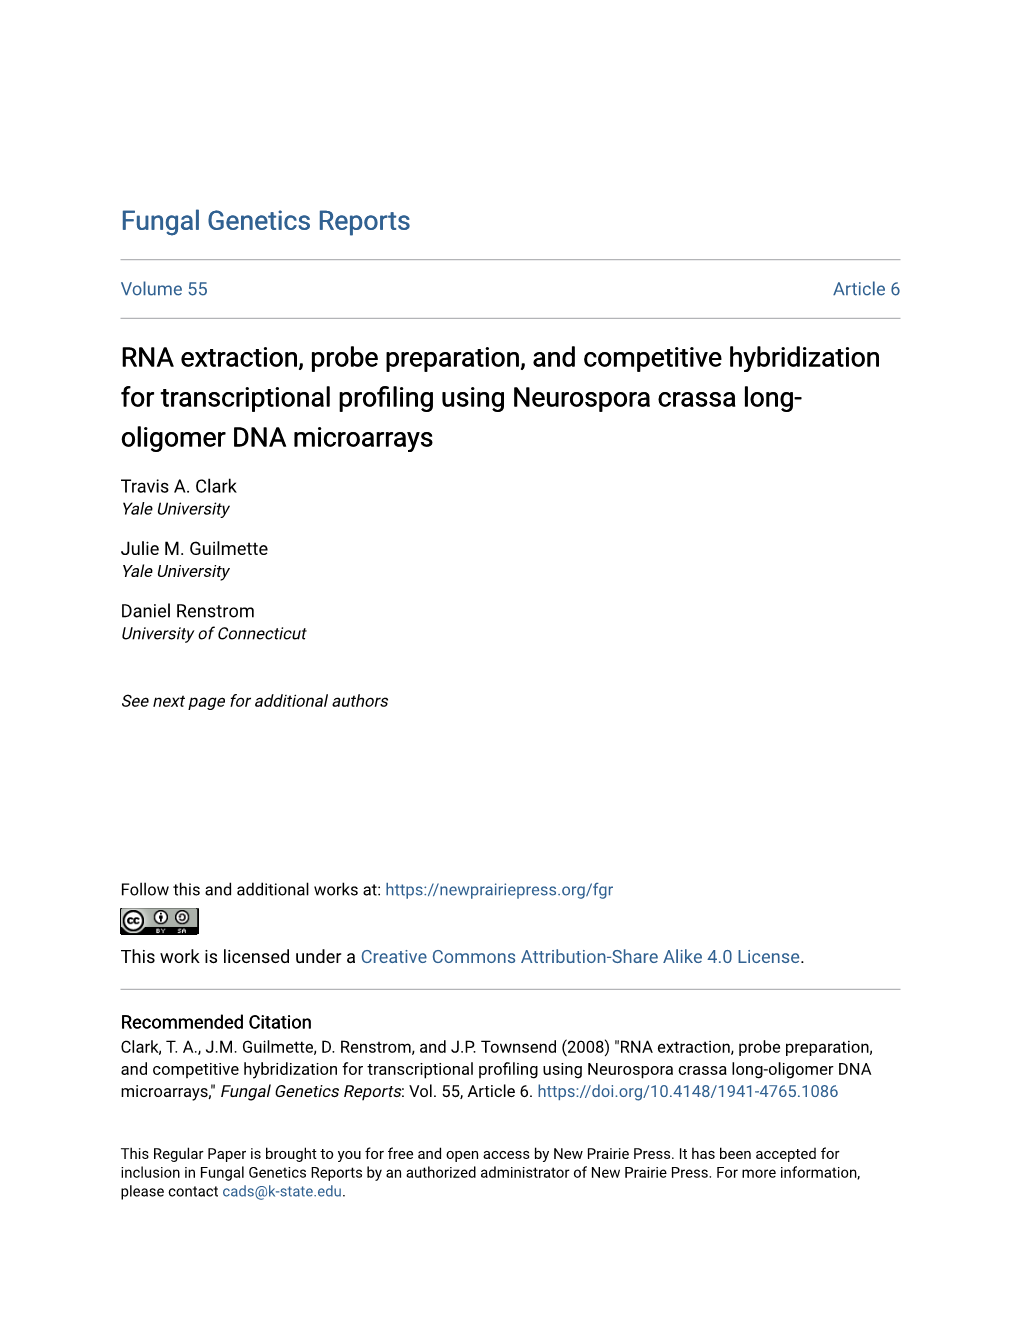 RNA Extraction, Probe Preparation, and Competitive Hybridization for Transcriptional Profiling Using Neurospora Crassa Long- Oligomer DNA Microarrays